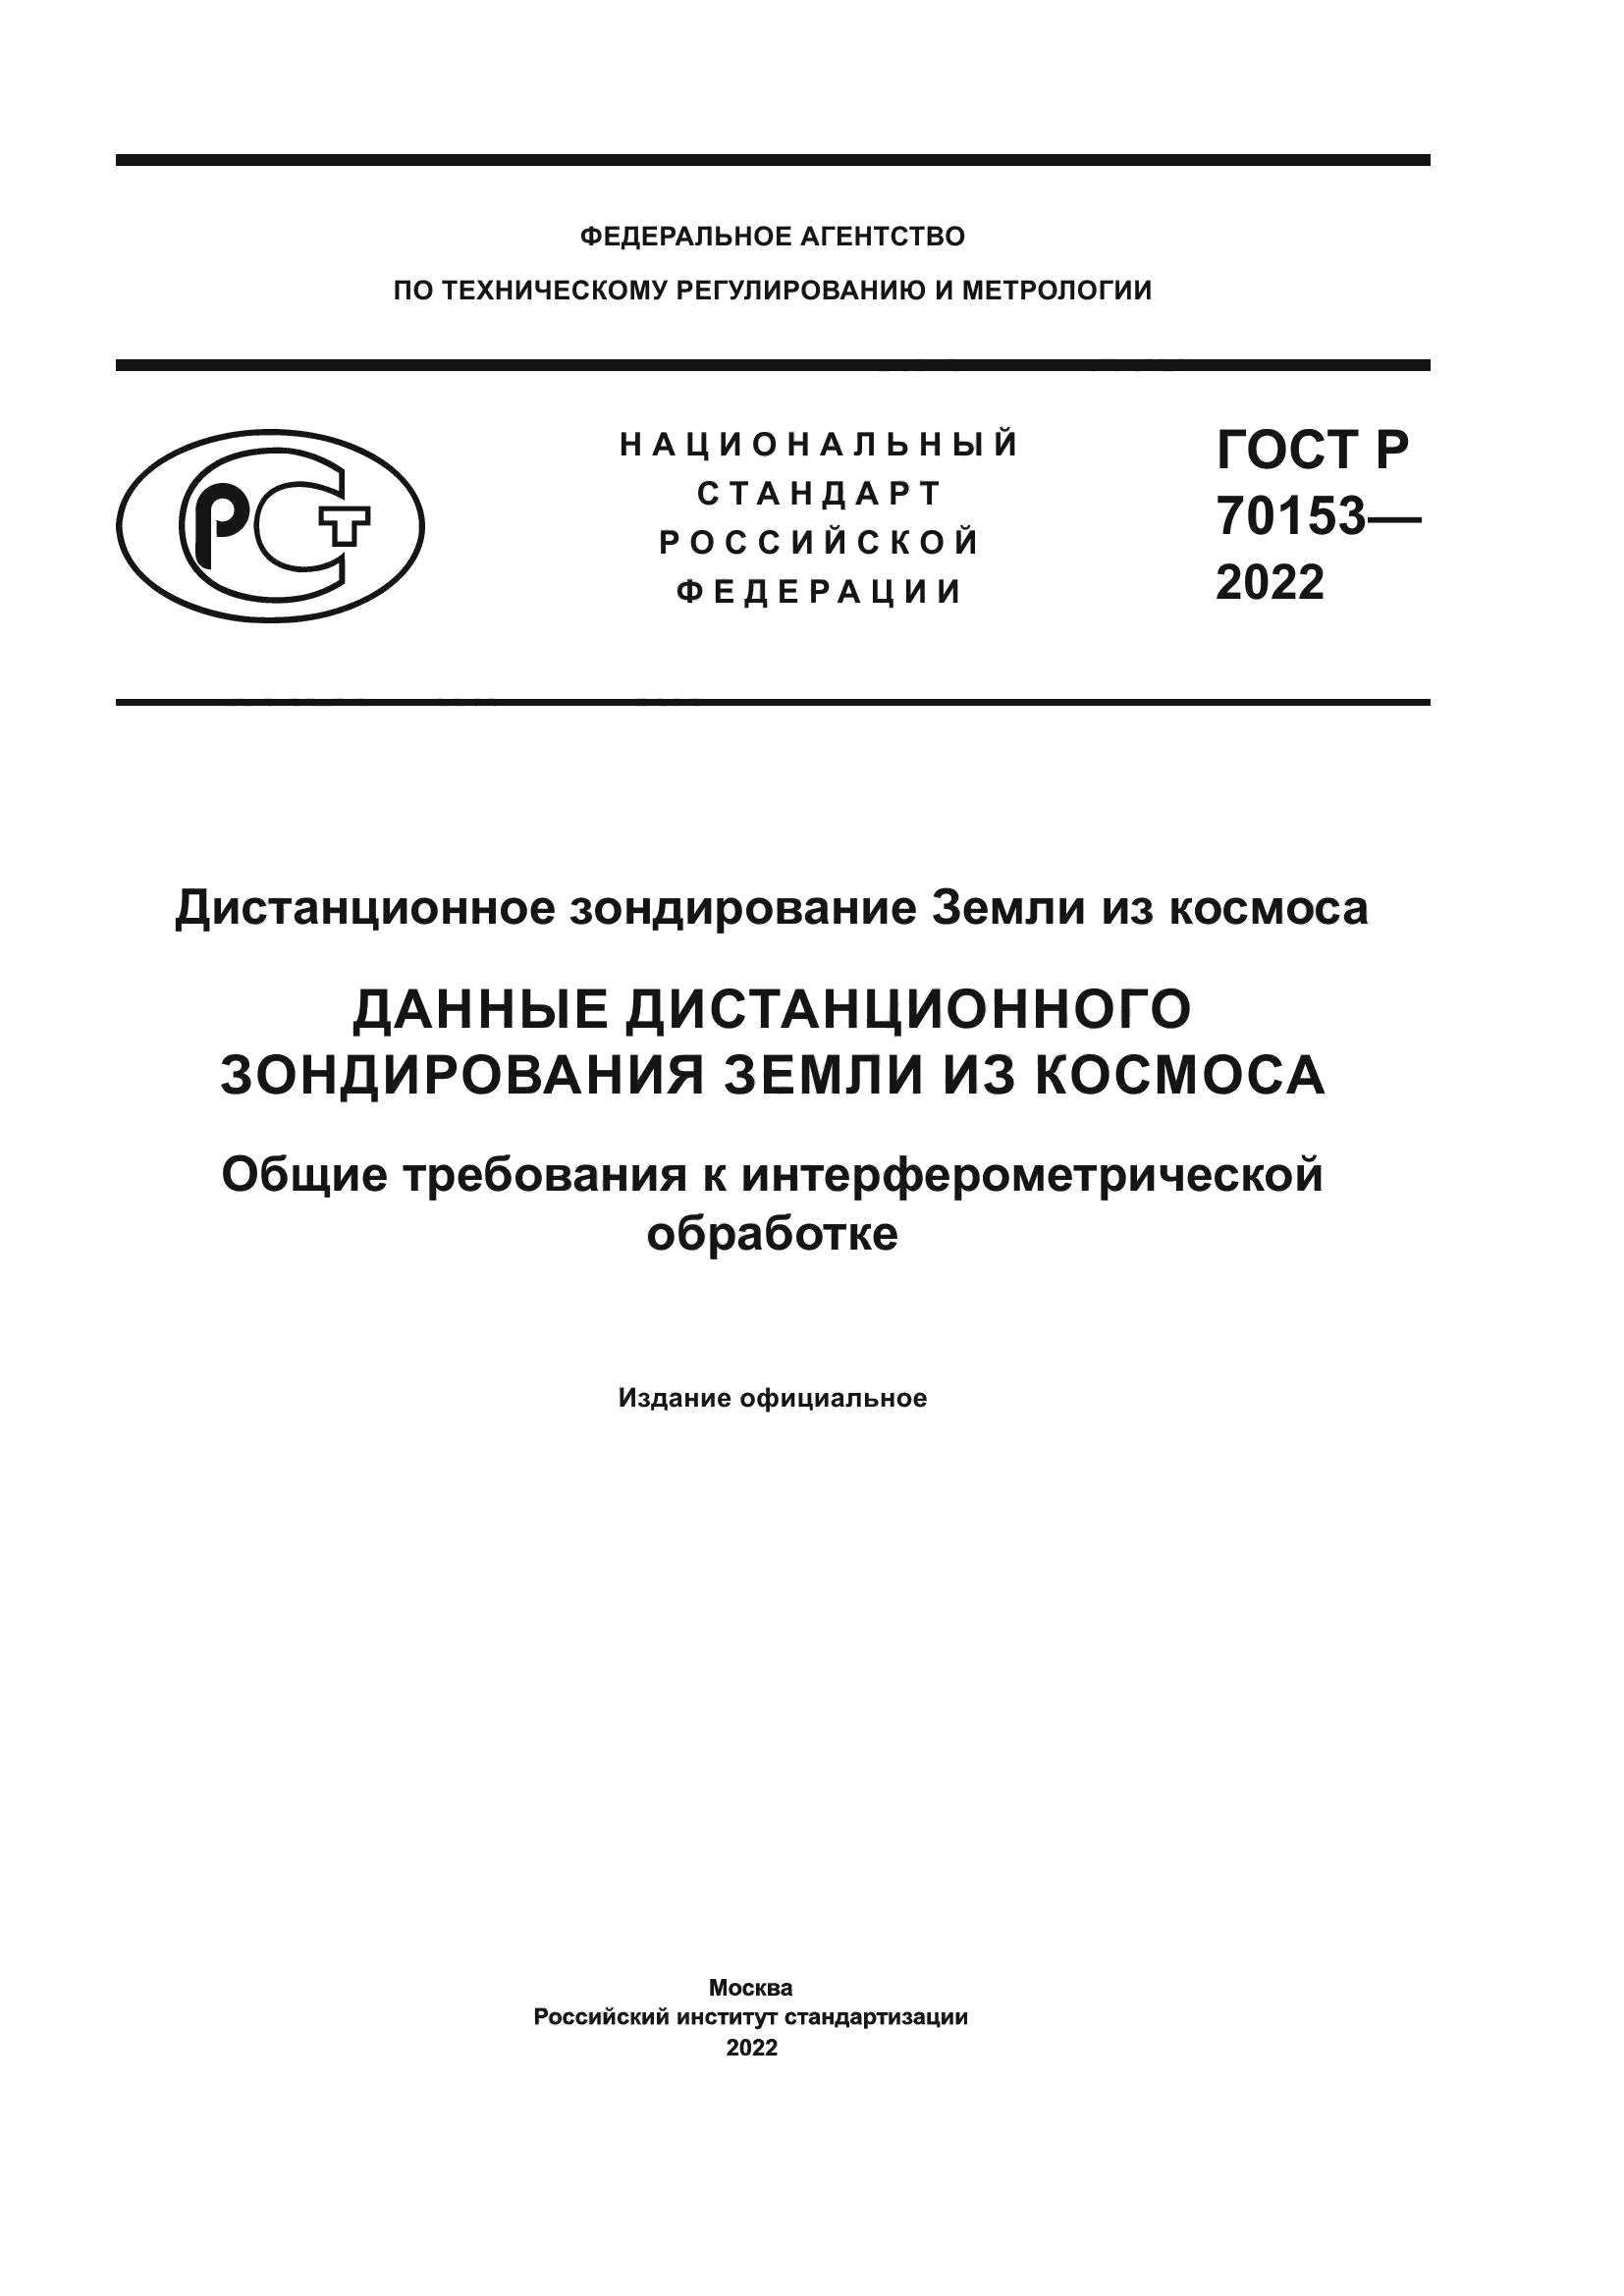 ГОСТ Р 70153-2022